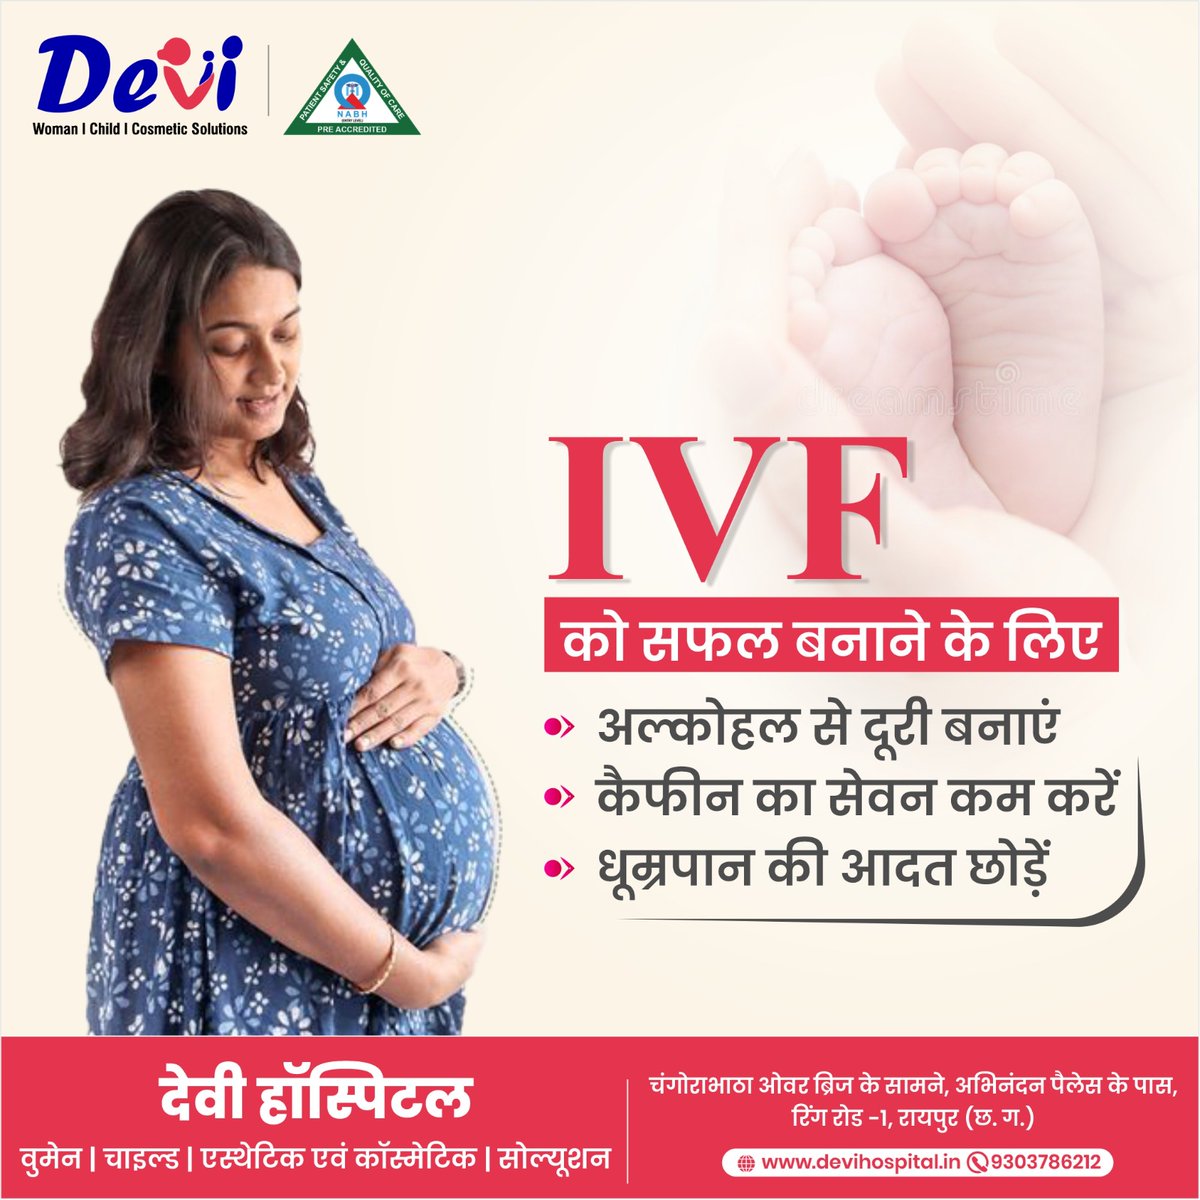 आई वी एफ को सफल बनाने के लिए टिप्स ।
#ivf #womenhealth #pregnancycare #healthytips #ivfhospital #healthcare #hostpitaltips #childhospital #ivfclinic #infertility #childbirth #Raipur
𝐅𝐨𝐫 𝐦𝐨𝐫𝐞 𝐢𝐧𝐟𝐨:-
Call: 093037 86212
YouTube Link 📷📷📷
youtu.be/AGSo8Zt67X8